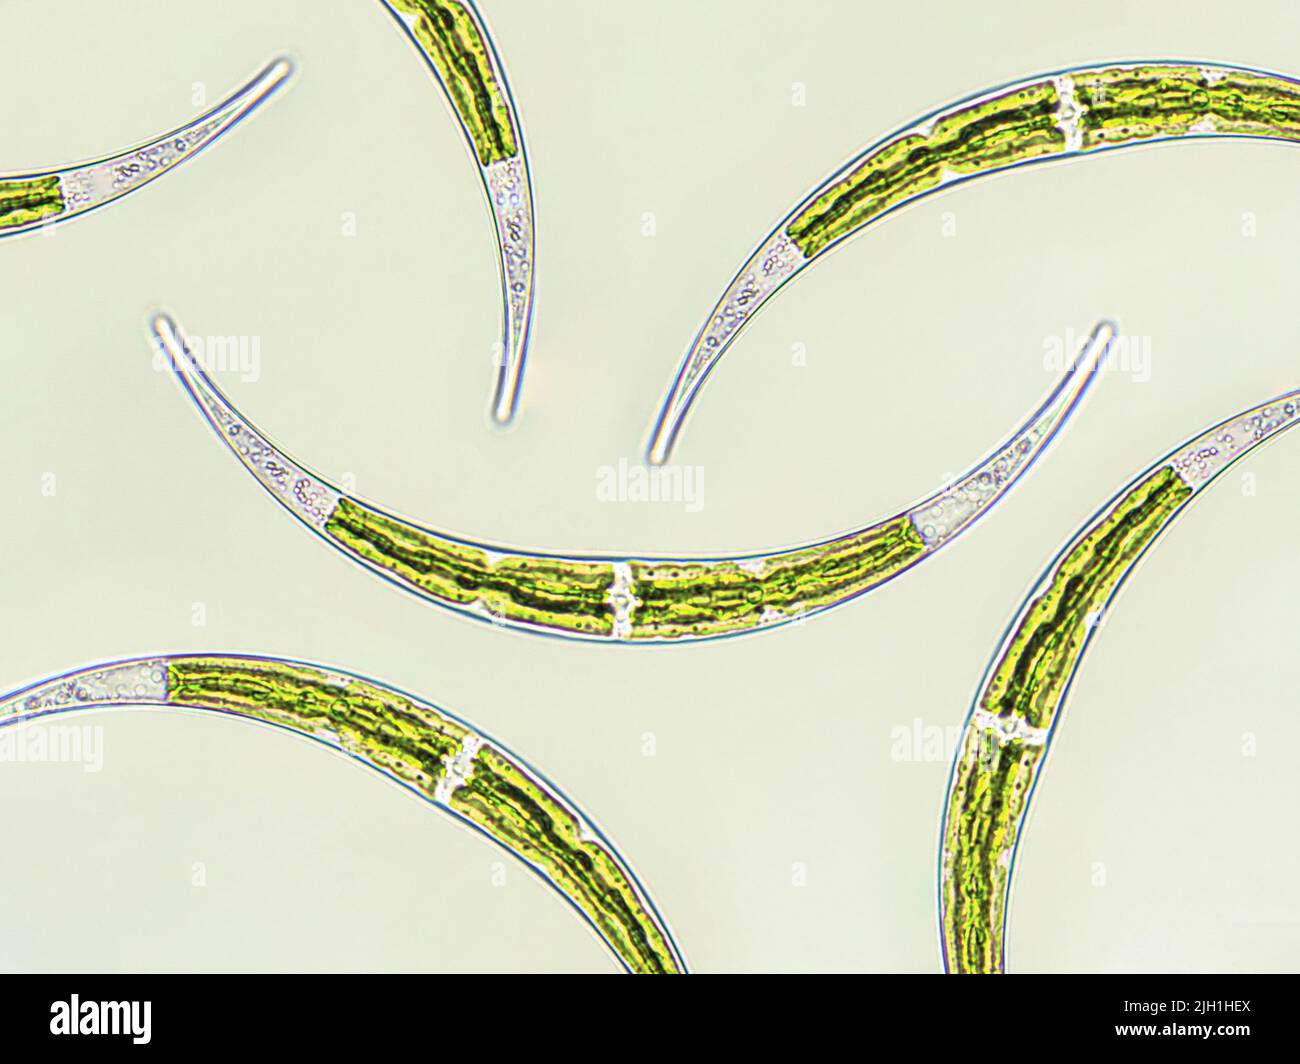 Closterium sp. Charophyta algae under microscopic view x40, Green algae Stock Photo